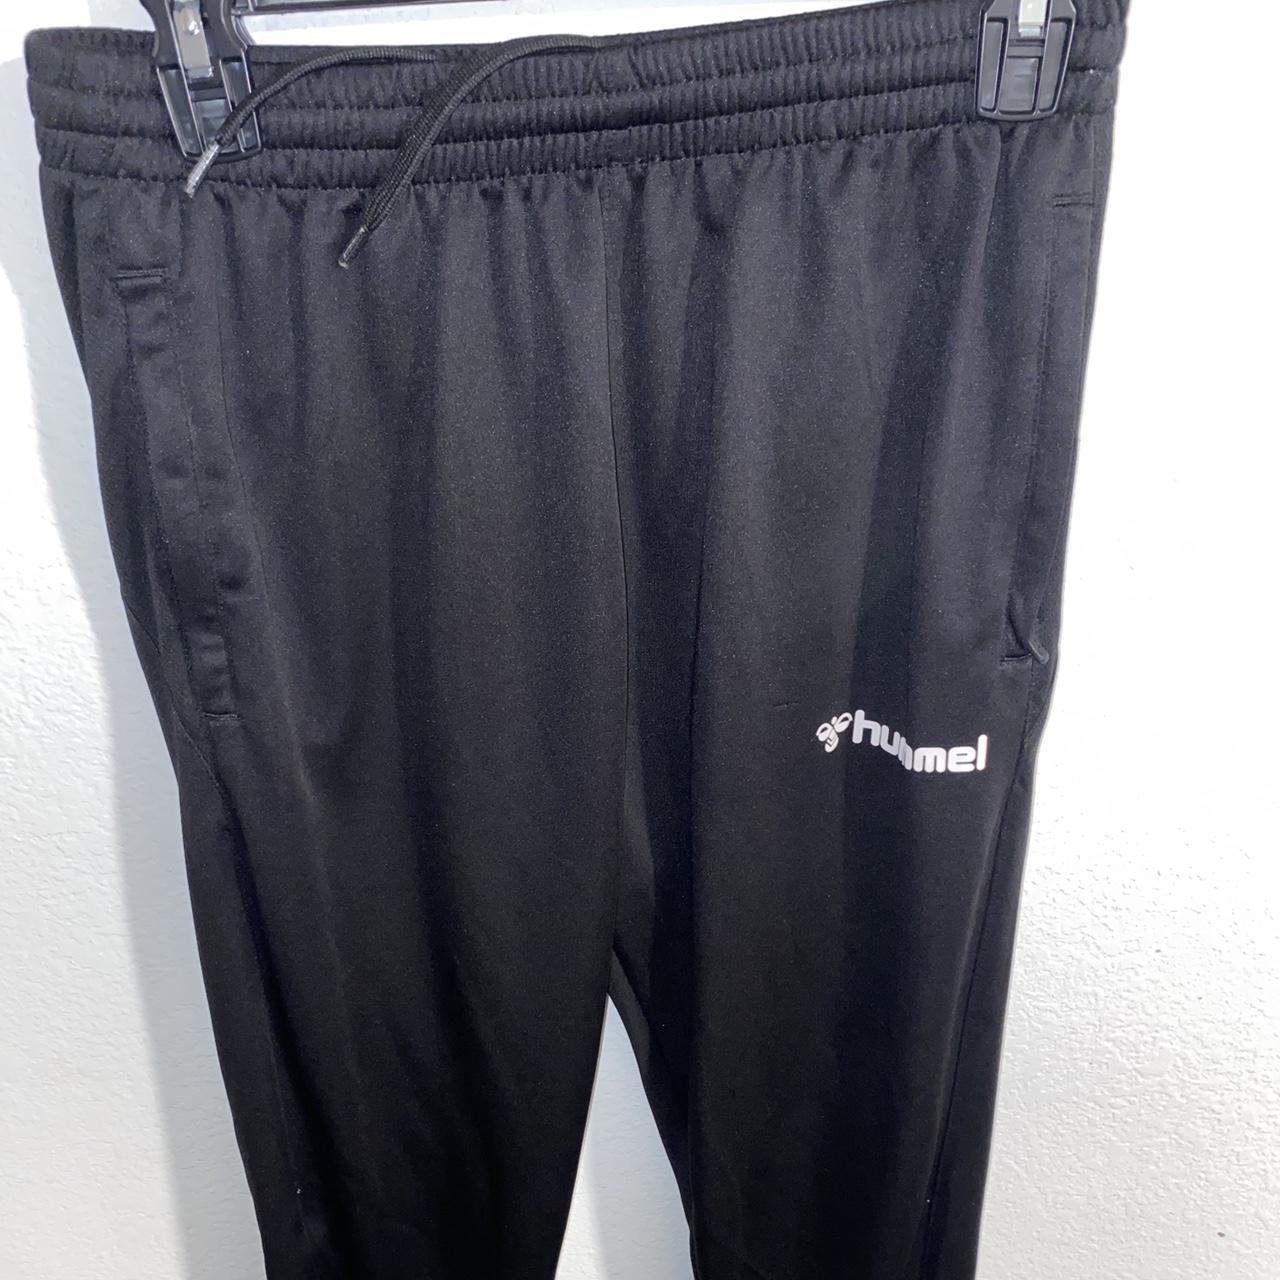 Product Image 1 - Hummel pants